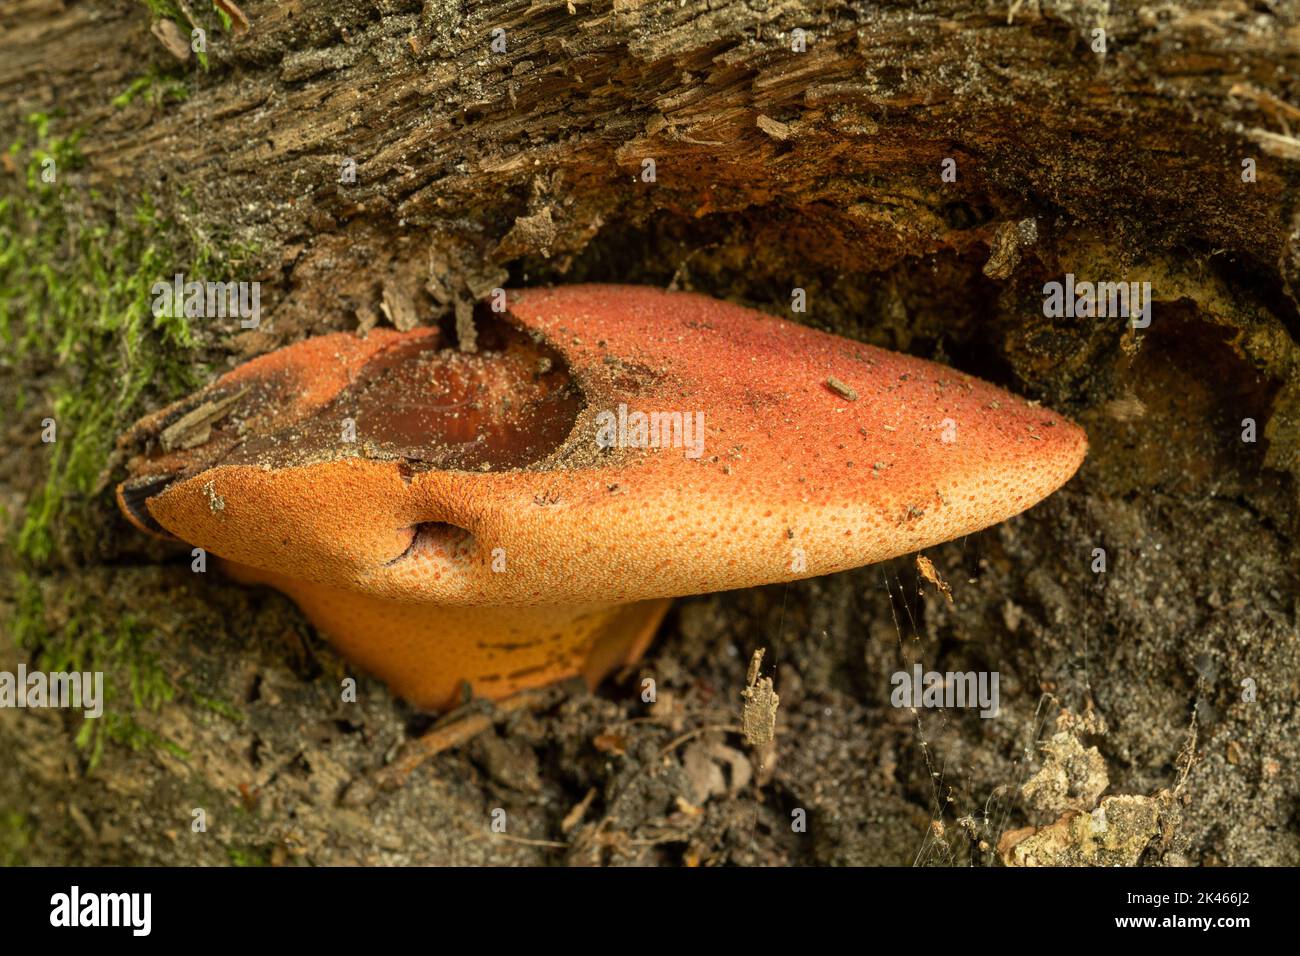 Beefsteak fungus (Fistulina hepatica) on oak tree in deciduous woodland during autumn, UK Stock Photo